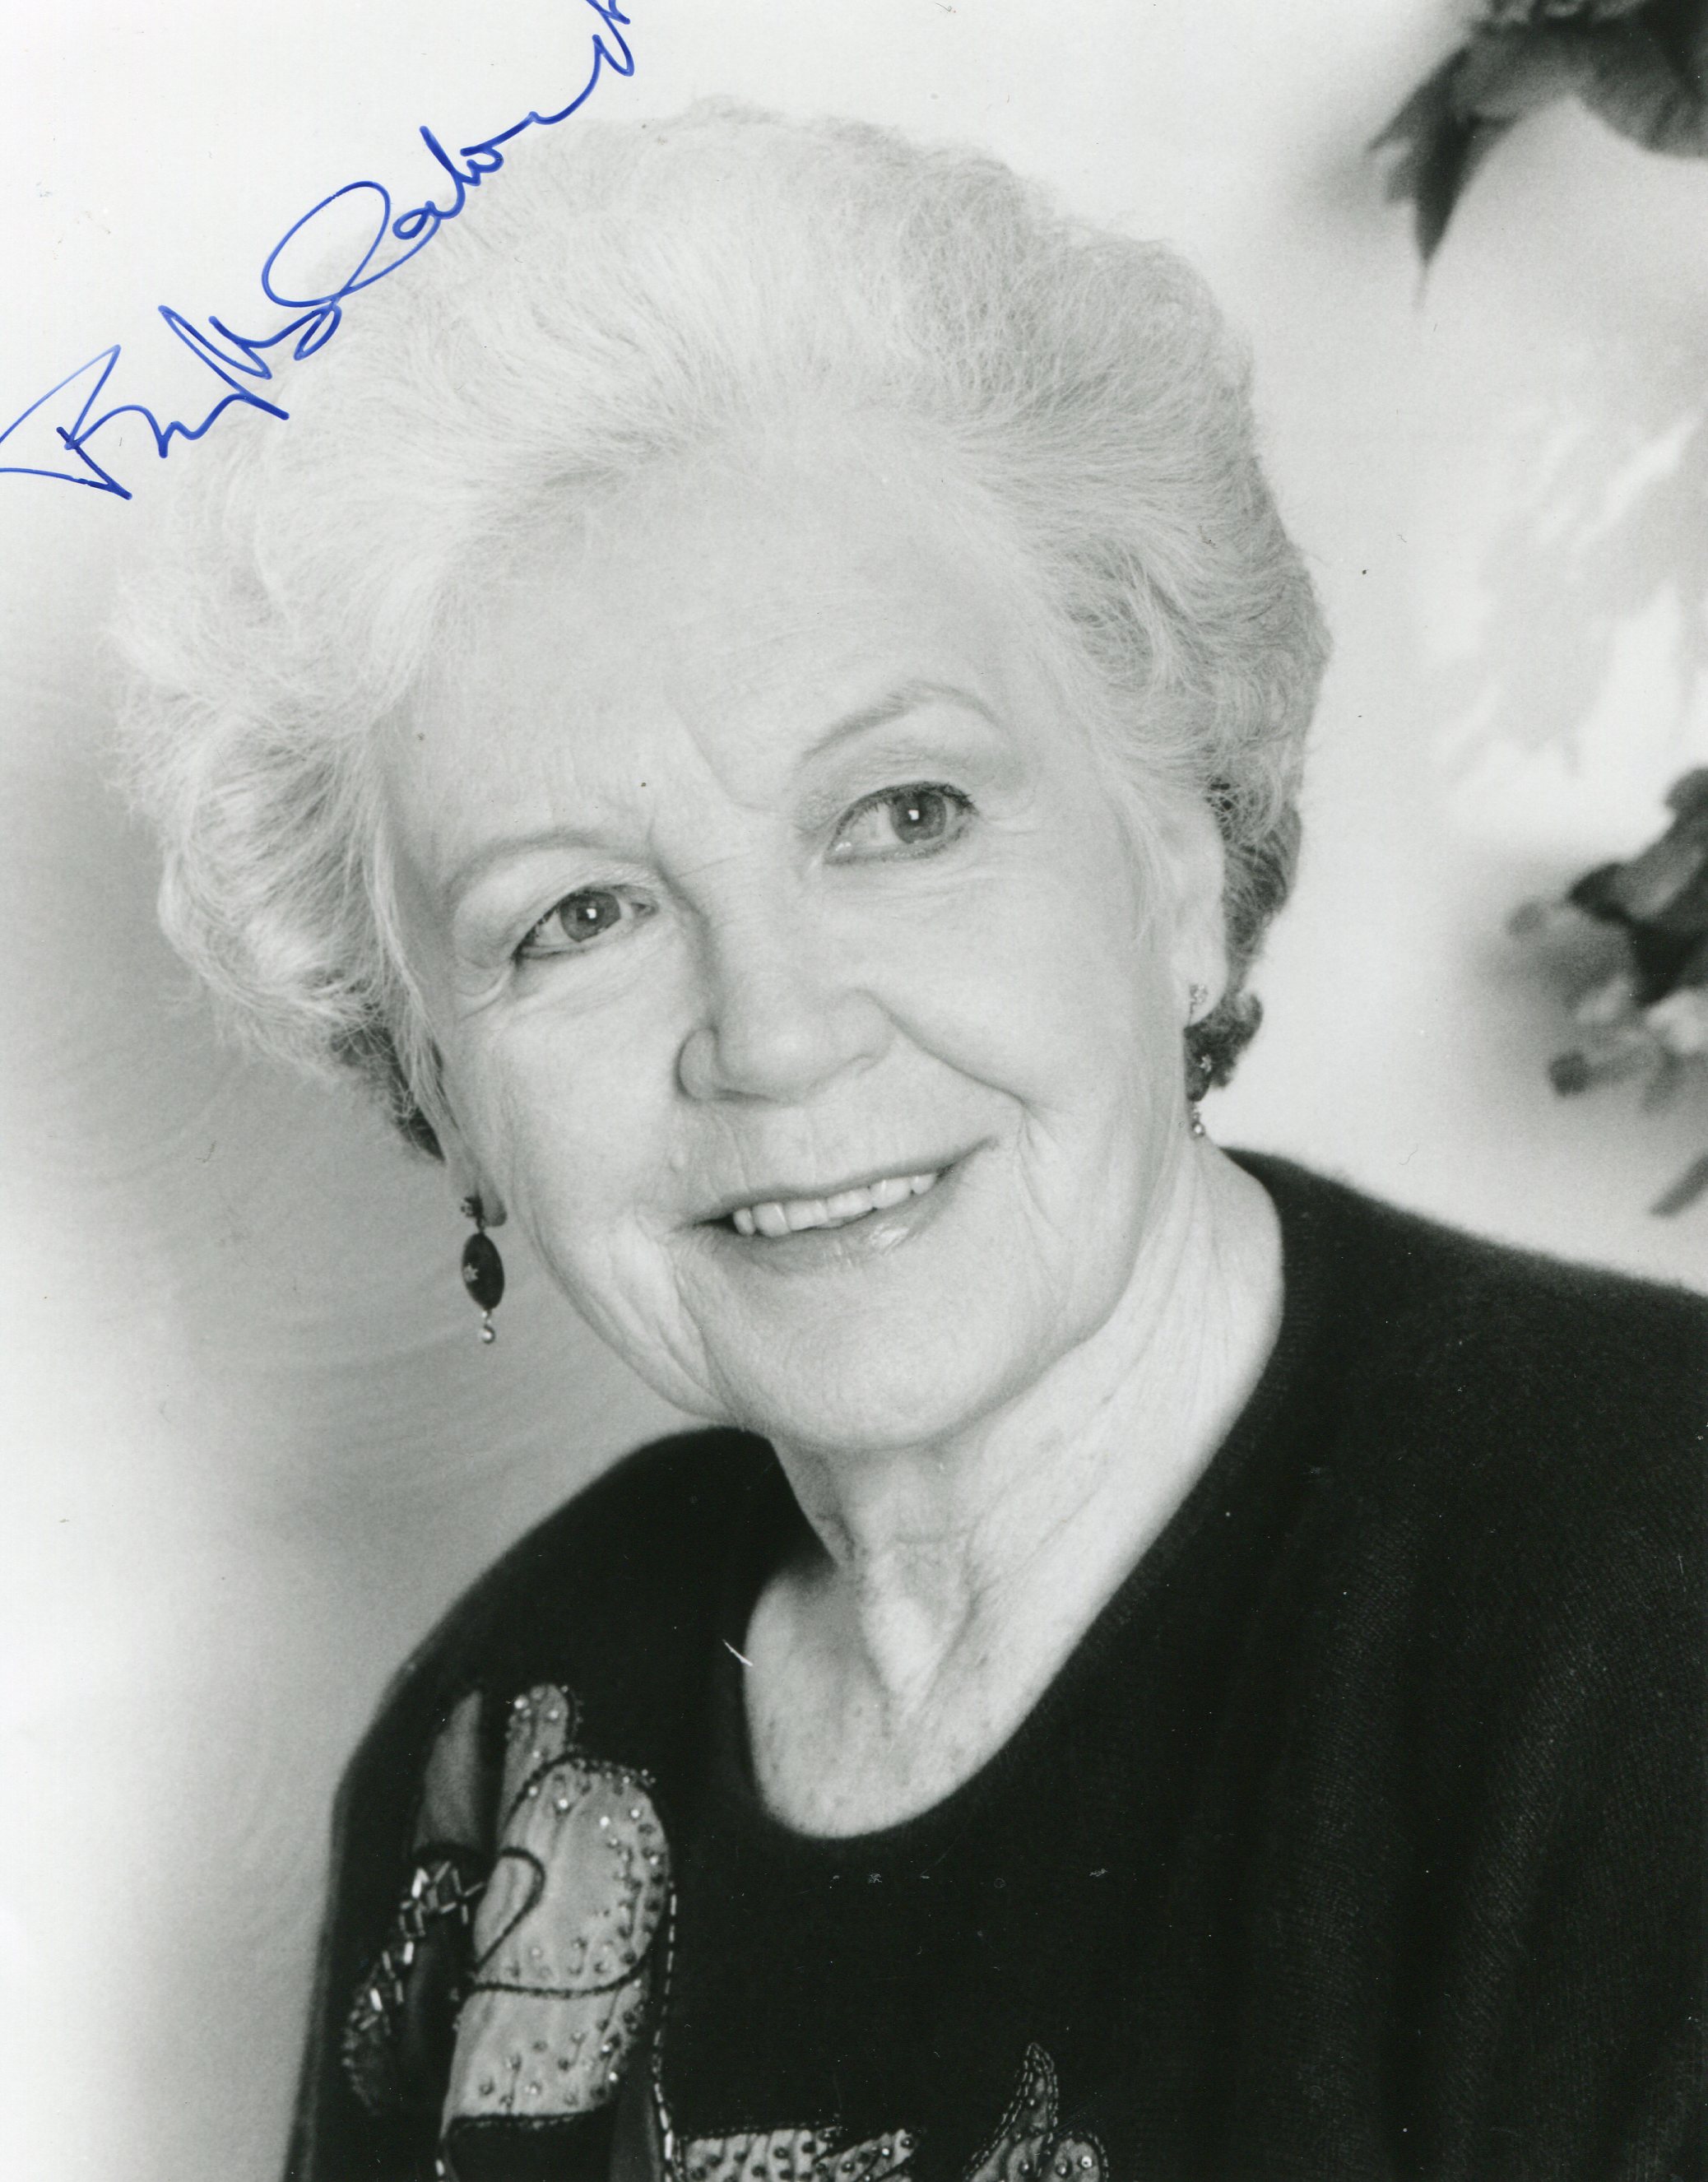 Phyllis Calvert - Movies & Autographed Portraits Through The Decades